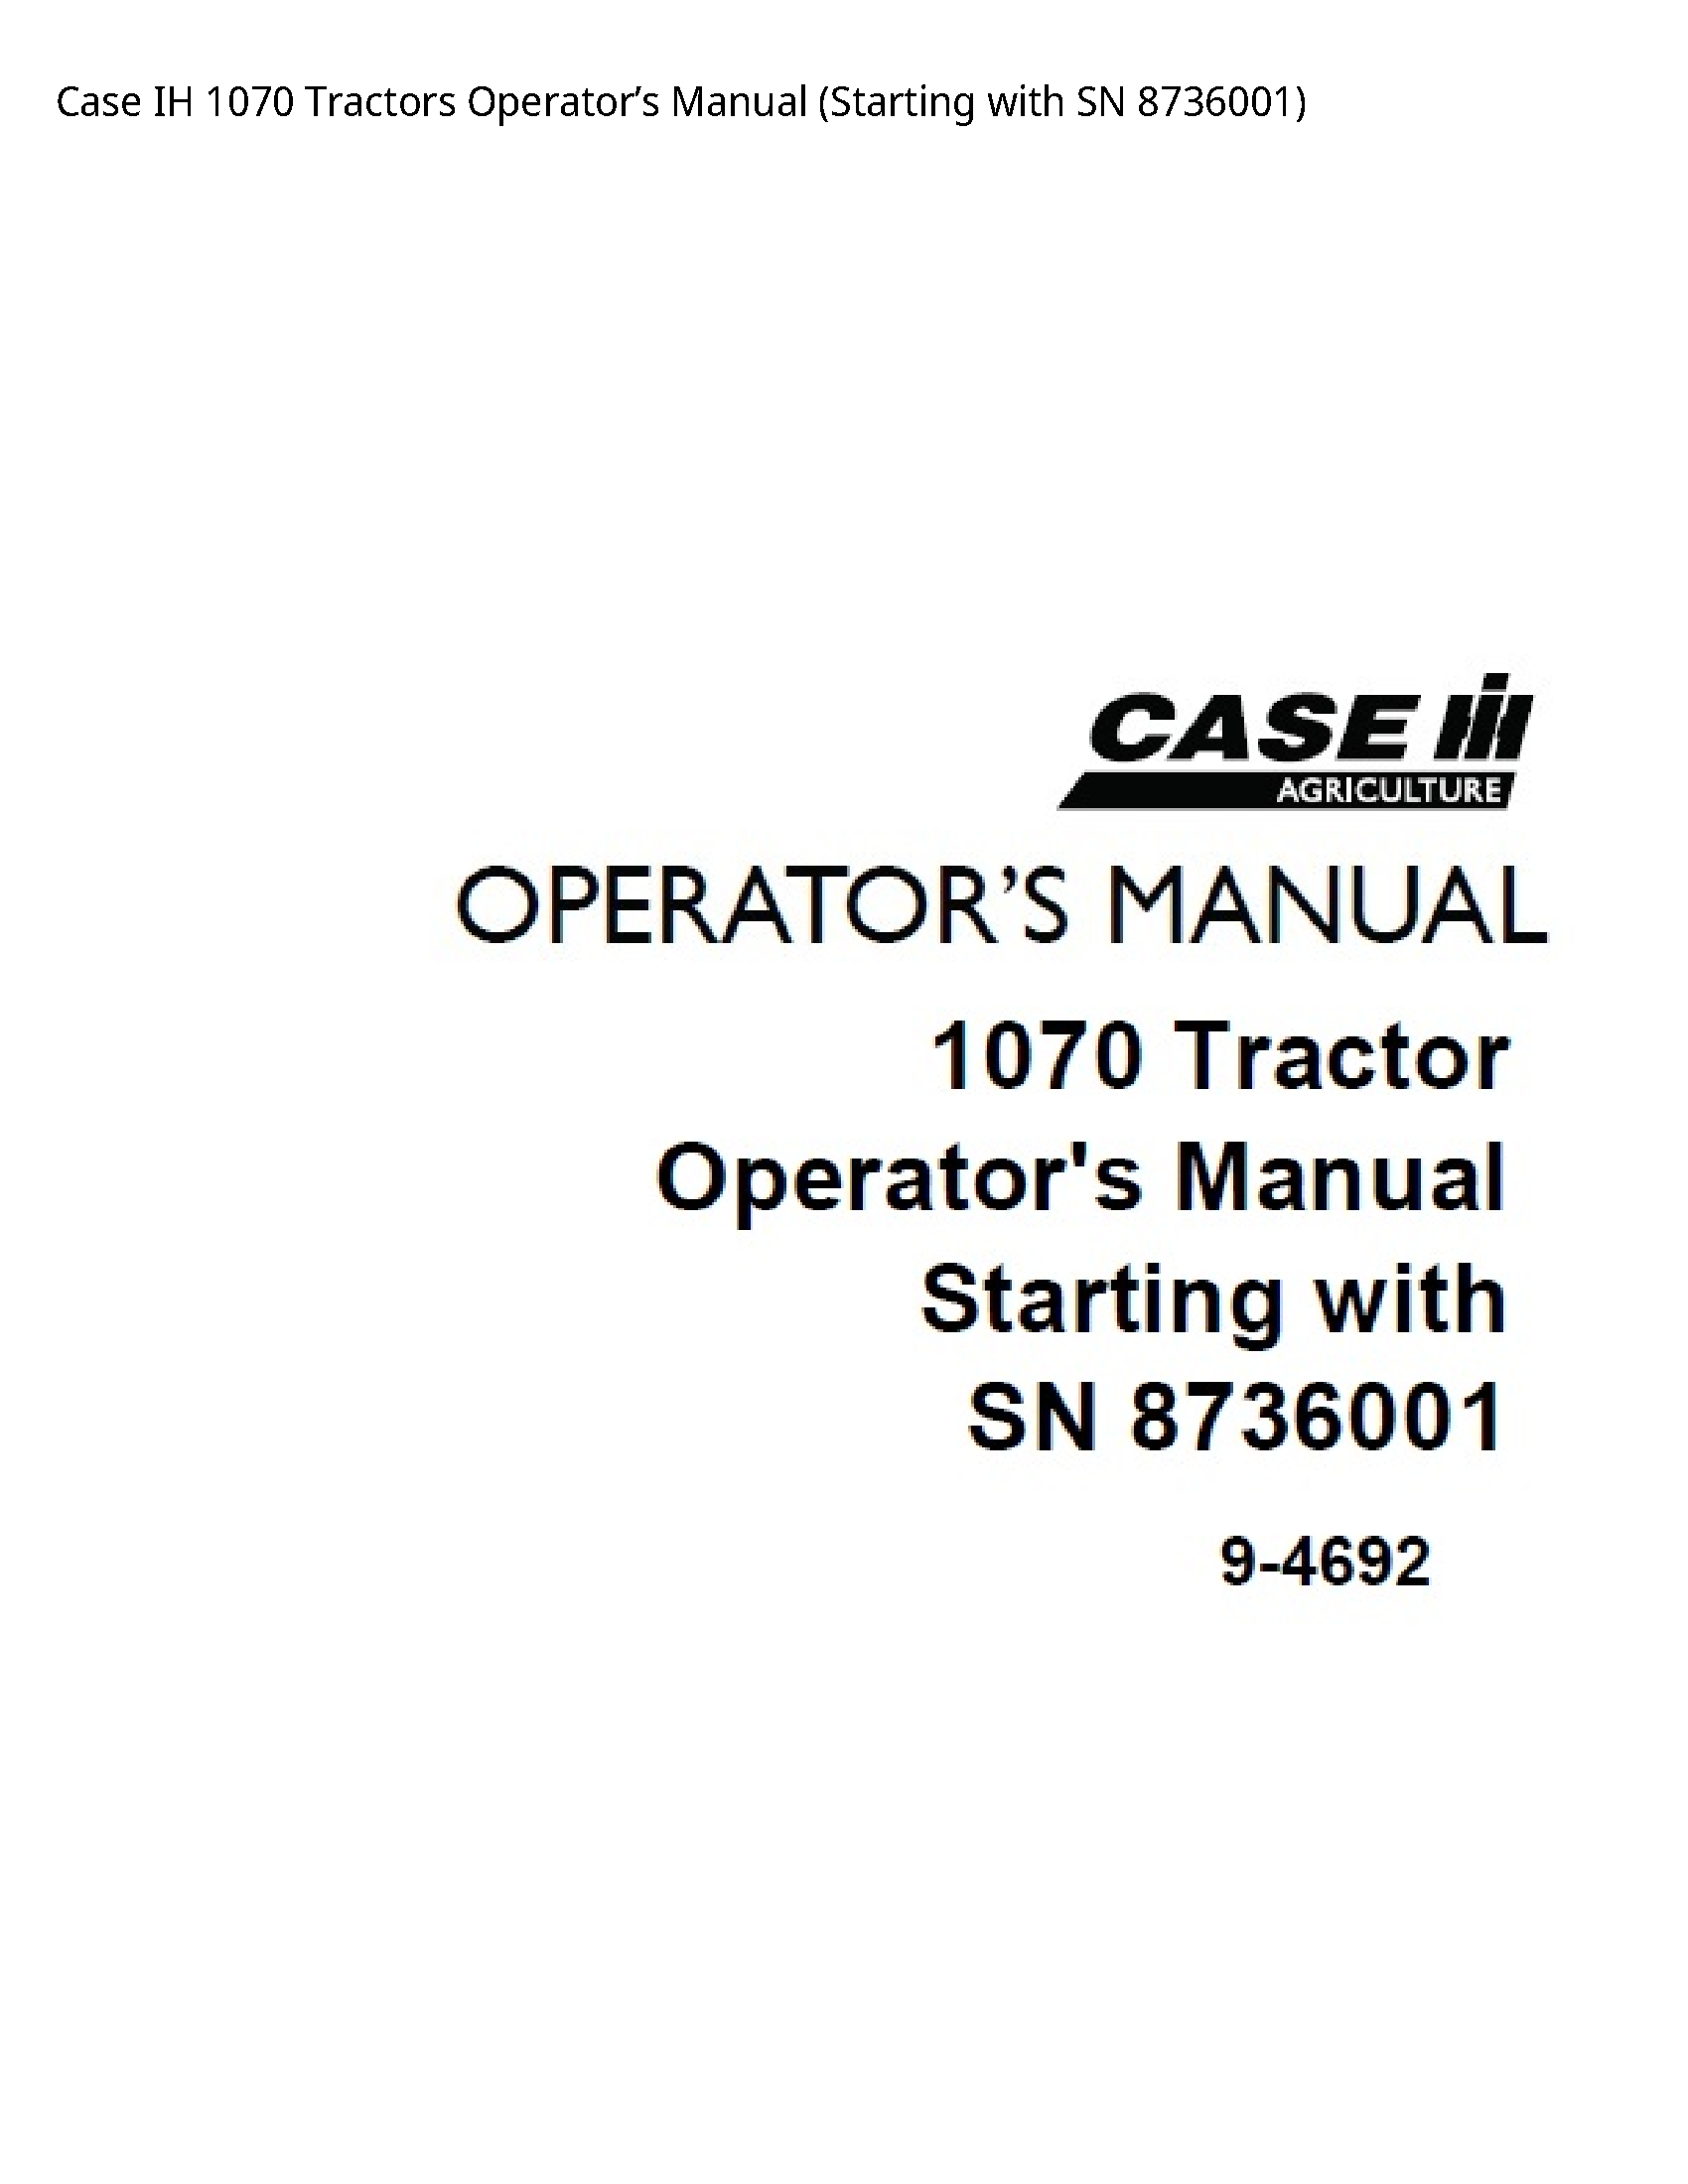 Case/Case IH 1070 IH Tractors Operator’s manual